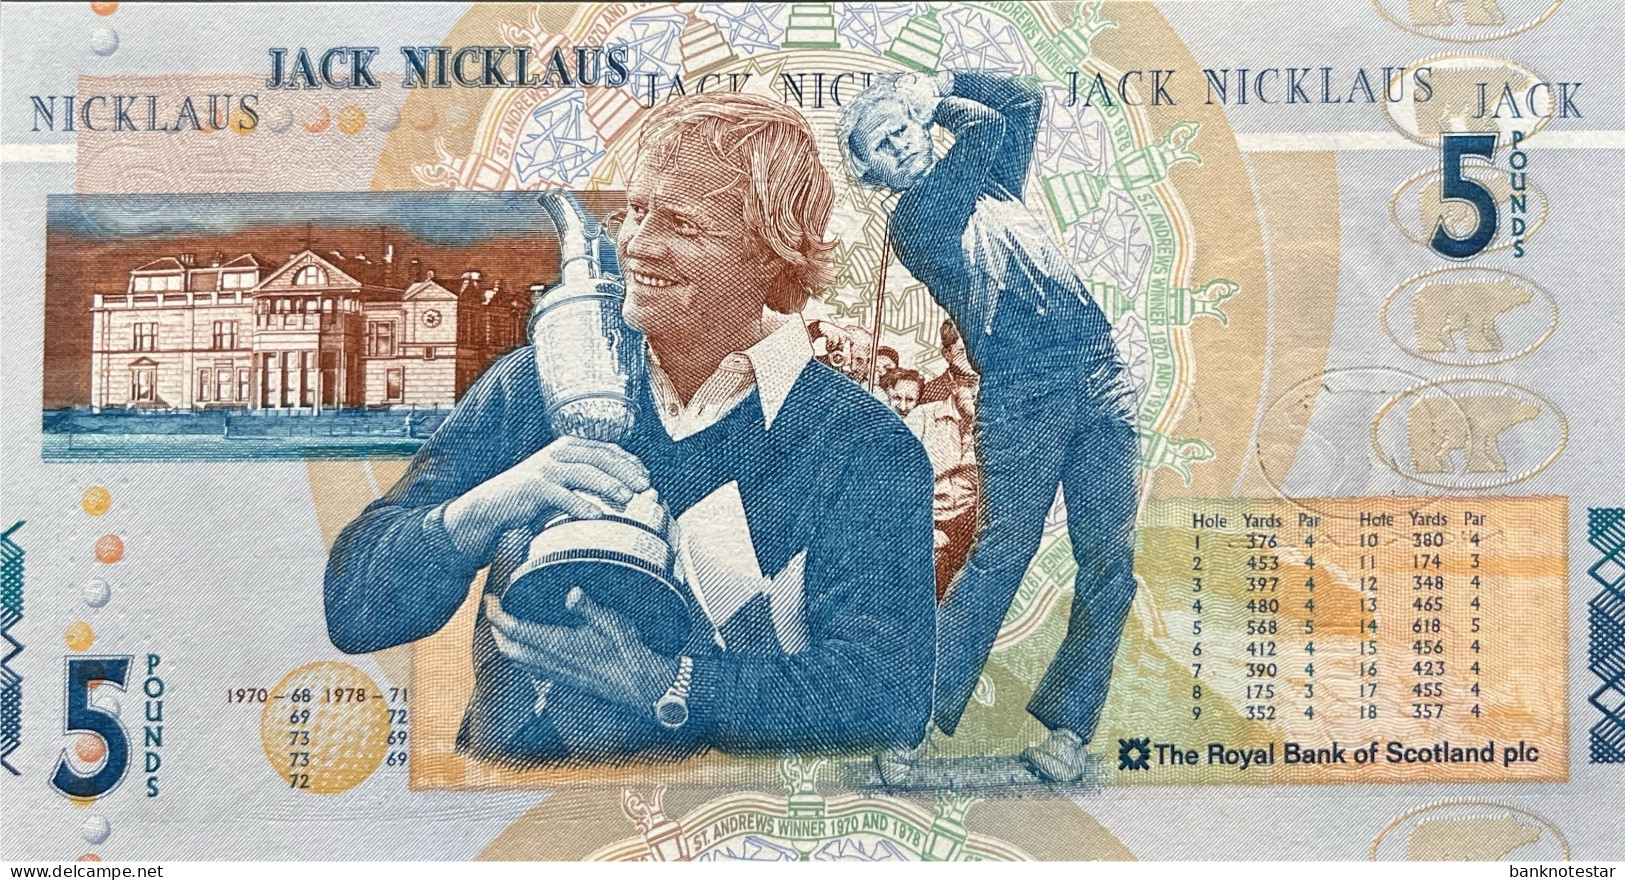 Scotland 5 Pounds, P-365 (14.7.2005) - UNC - Nicklaus Issue - 5 Pounds